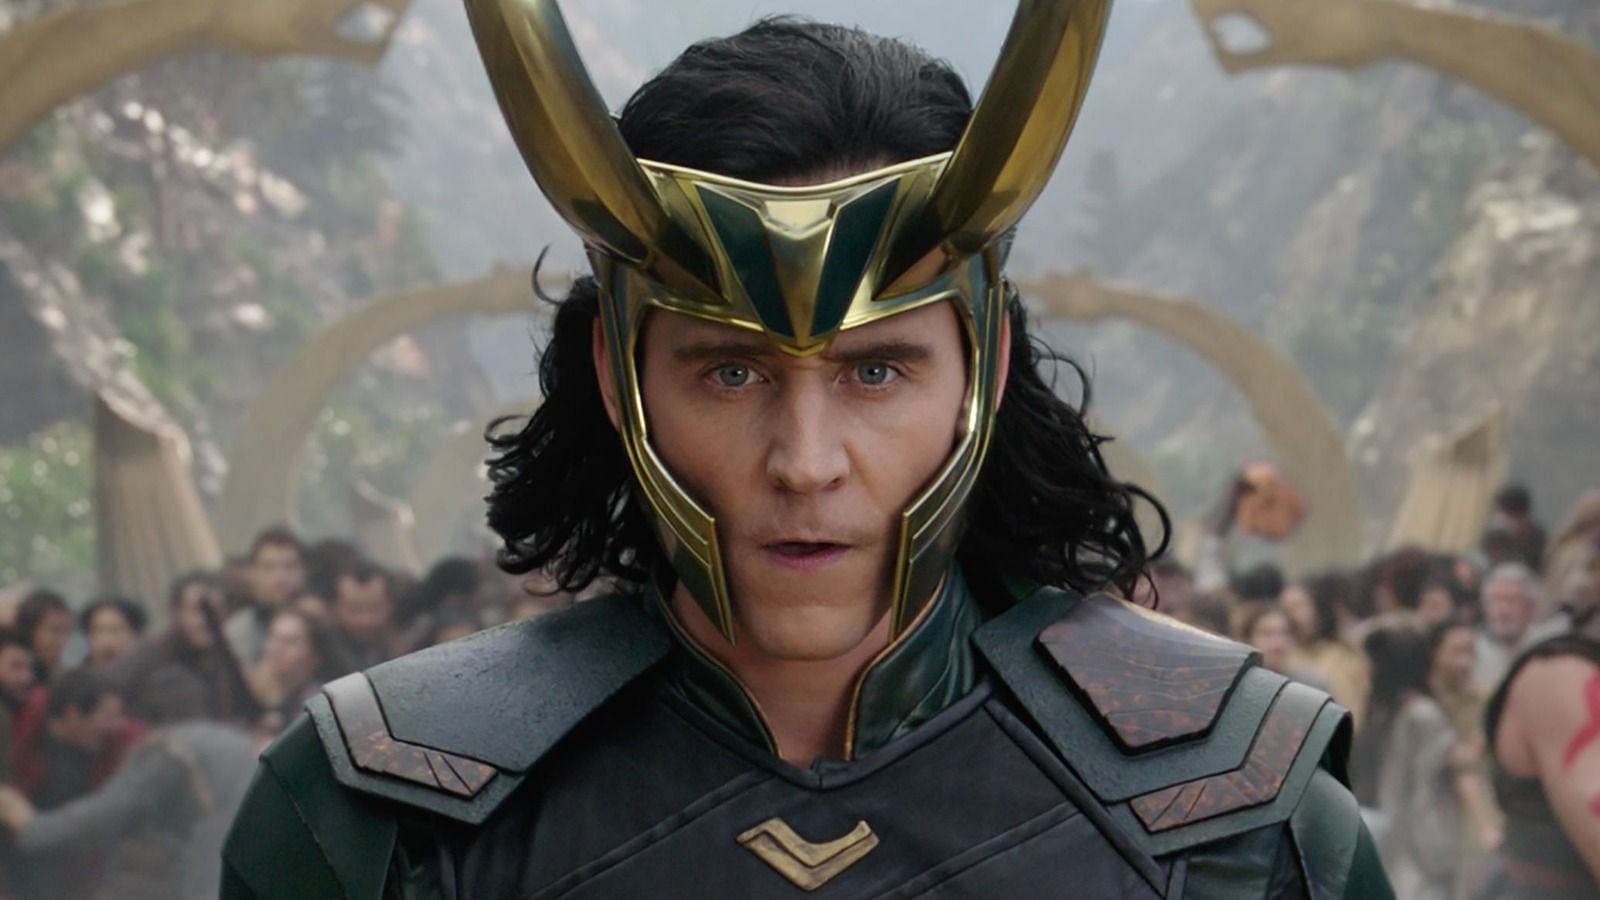 The MCU has created some truly memorable antagonists, like the sympathetic Loki (Image via Marvel Studios)